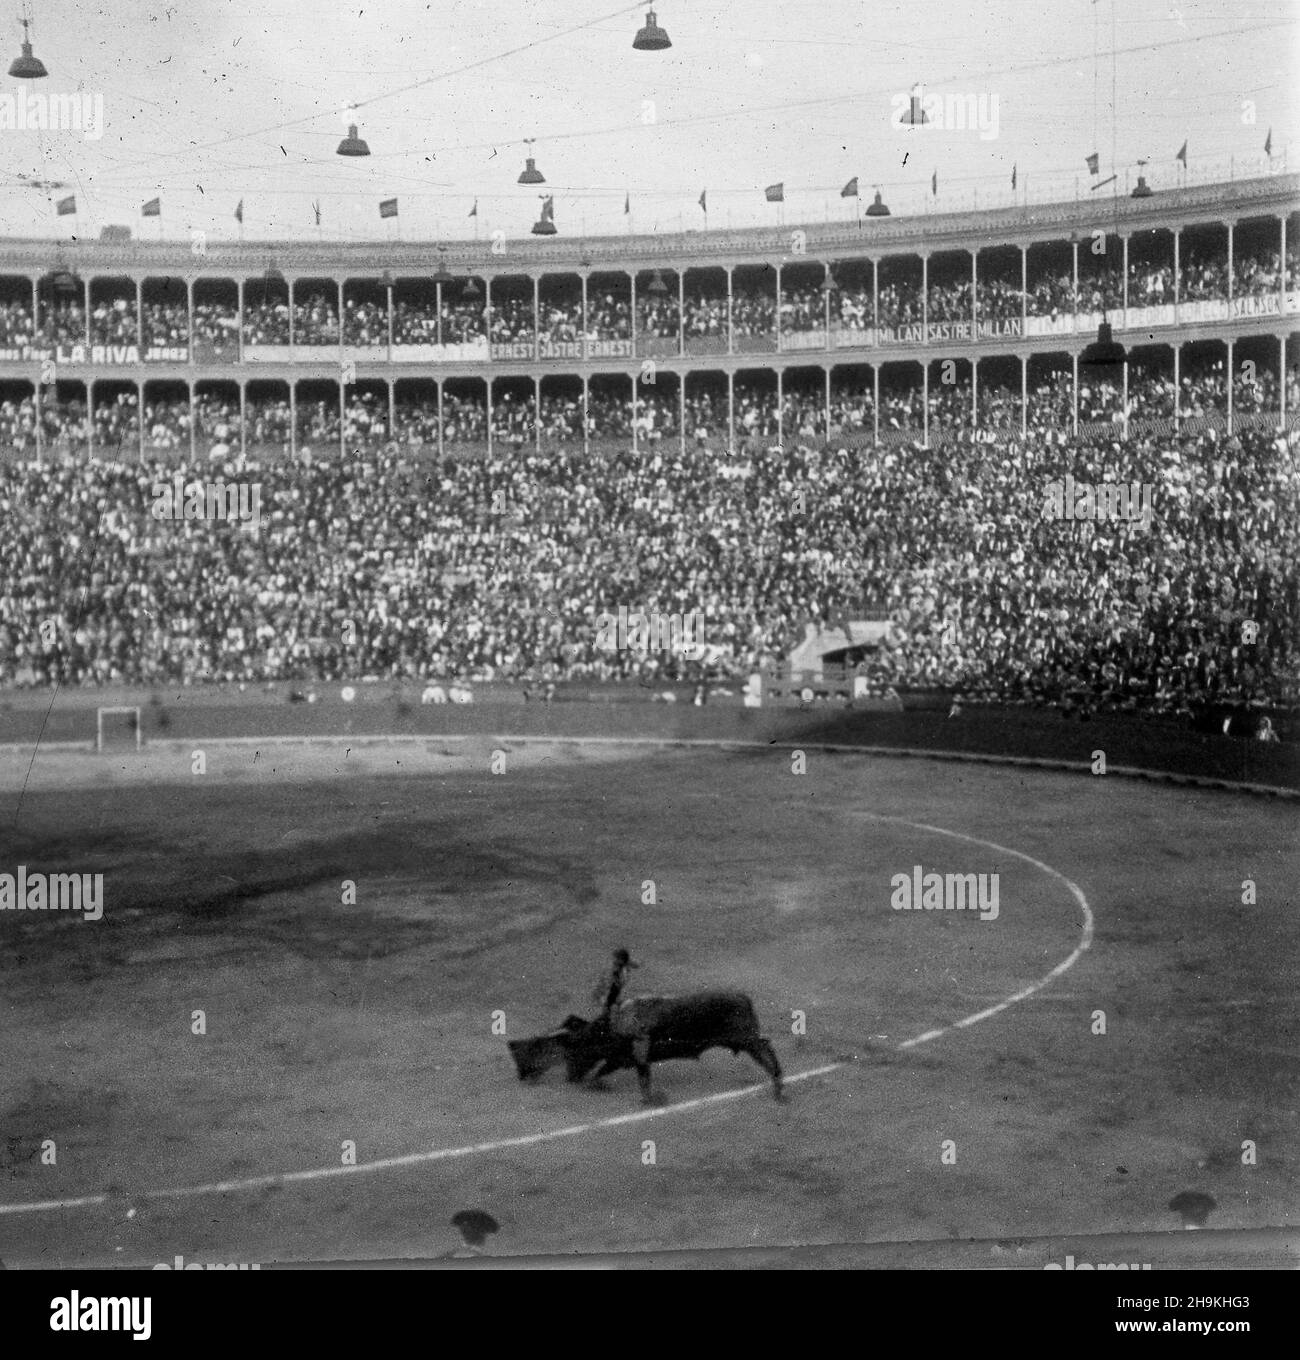 Valencia Bullring stadium Spain 1926 Stock Photo